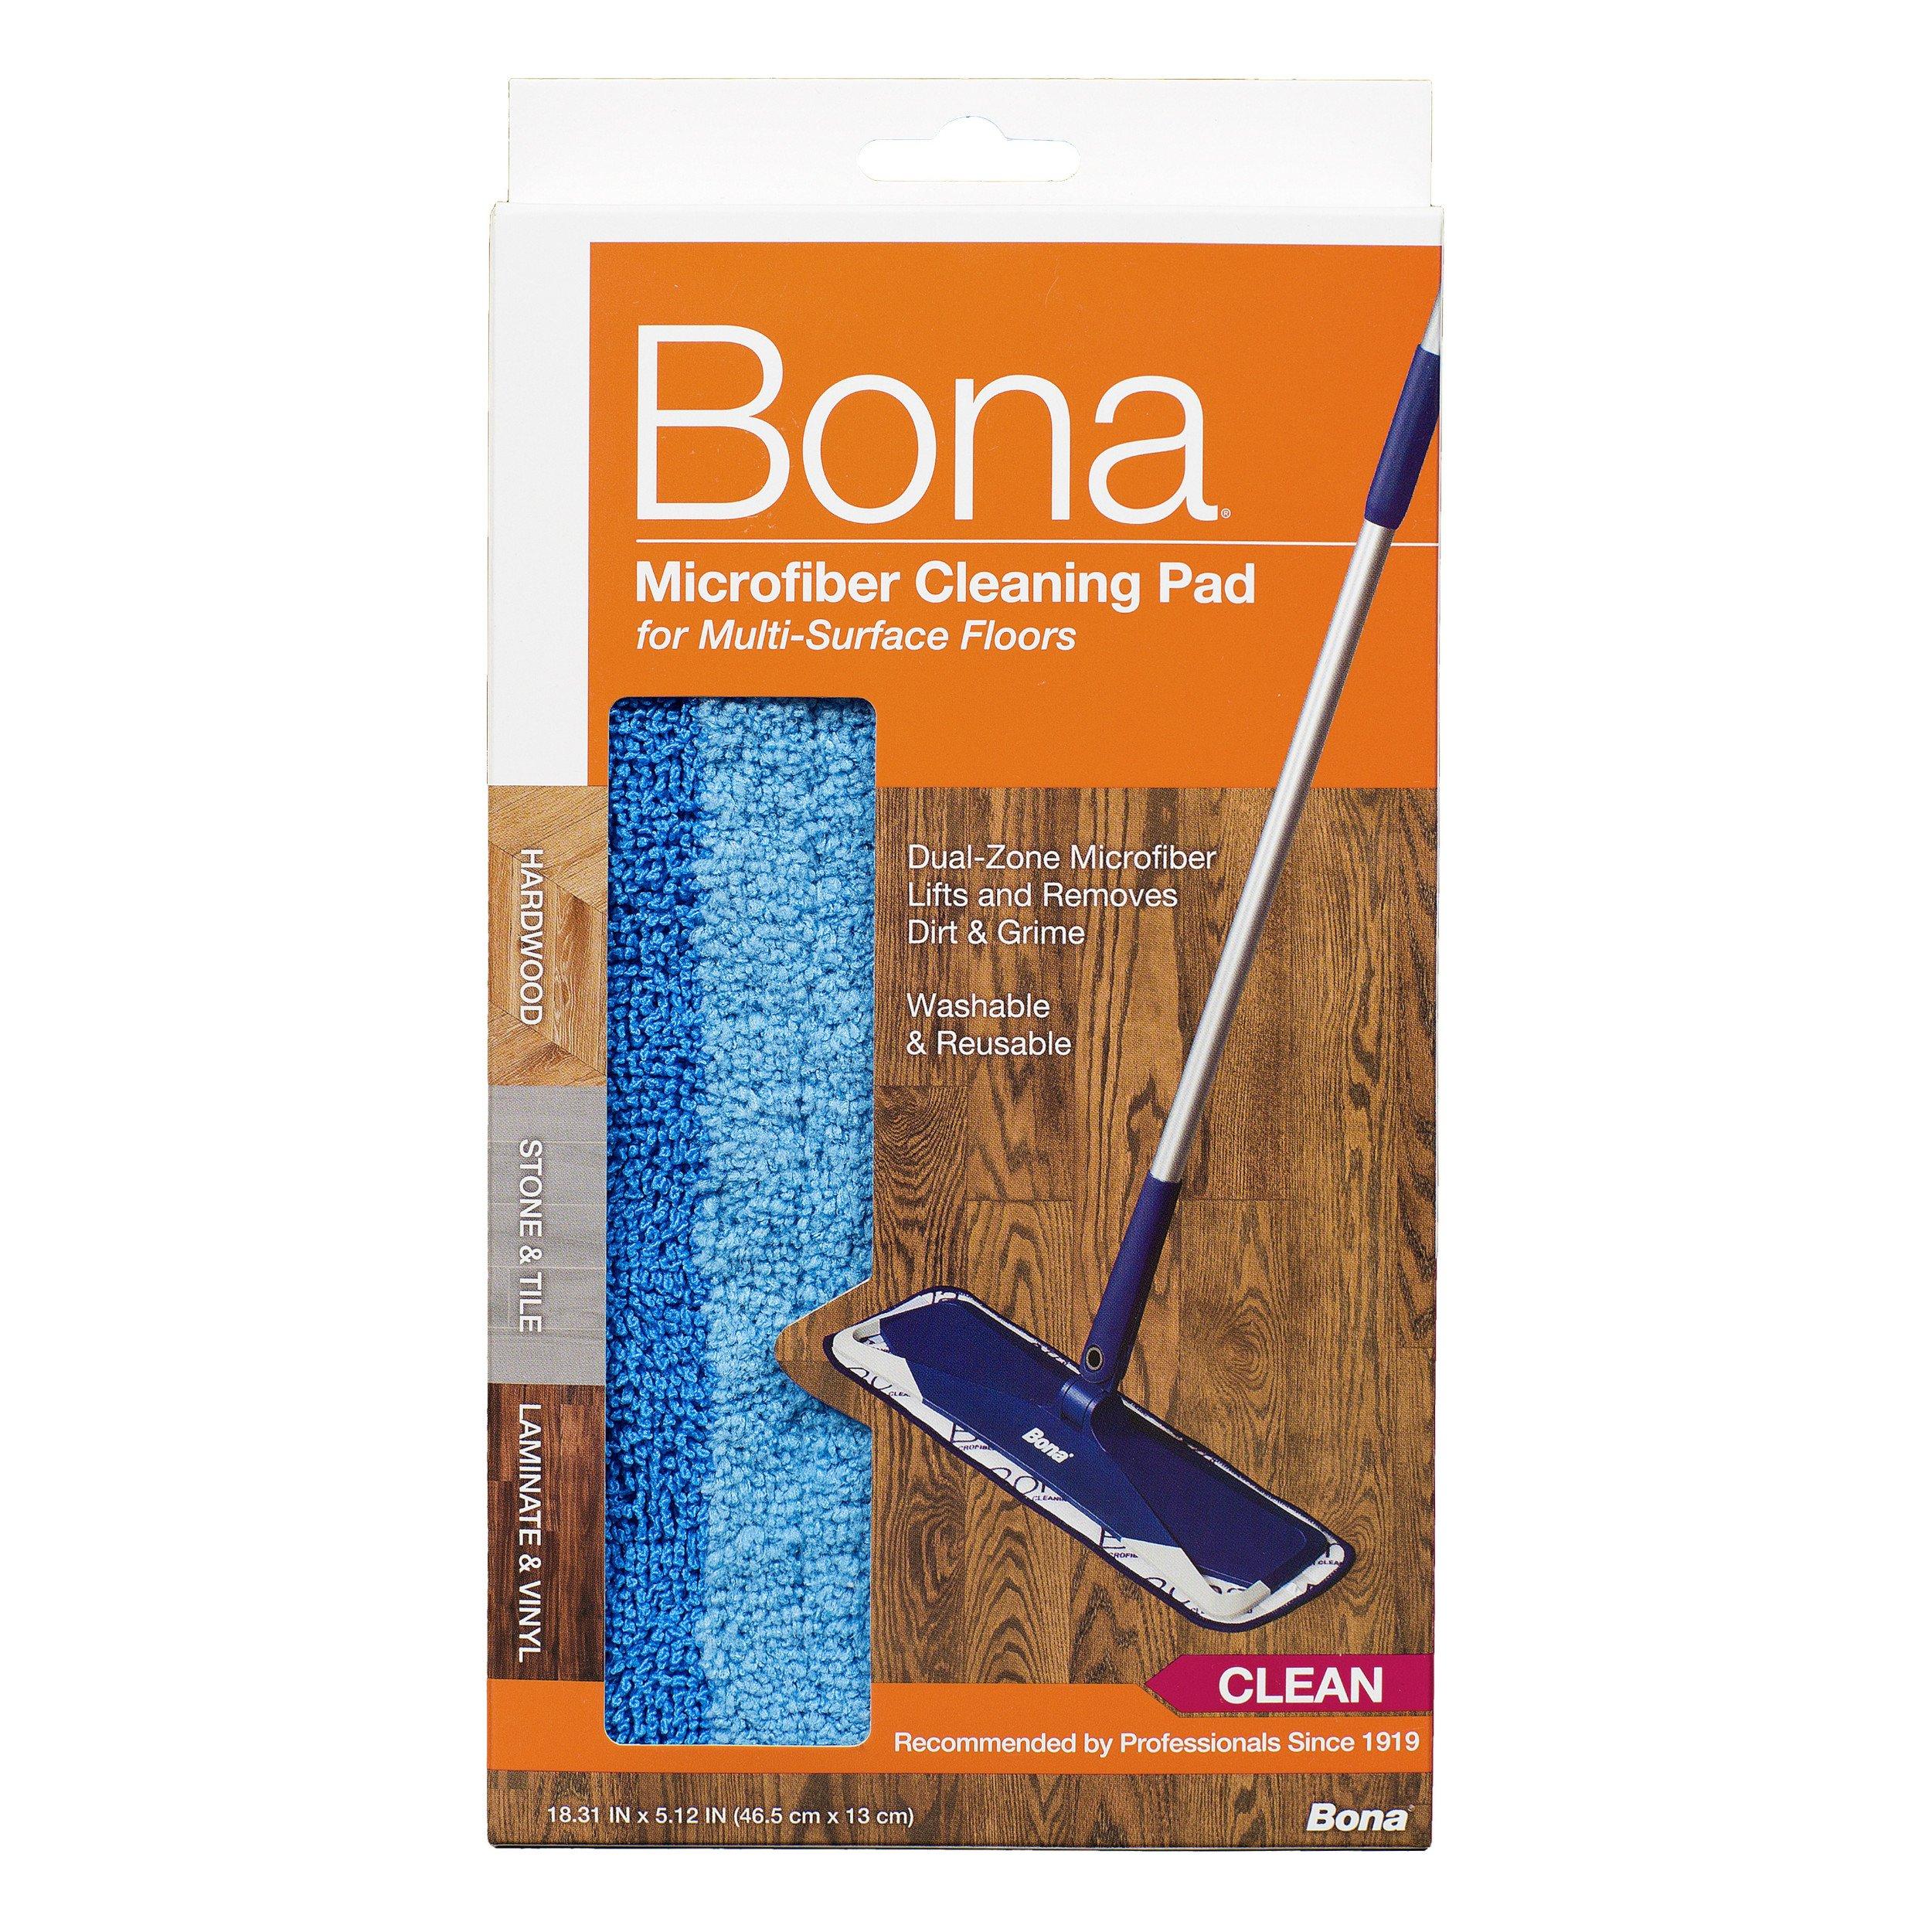 Bona Microfiber Cleaning Pad